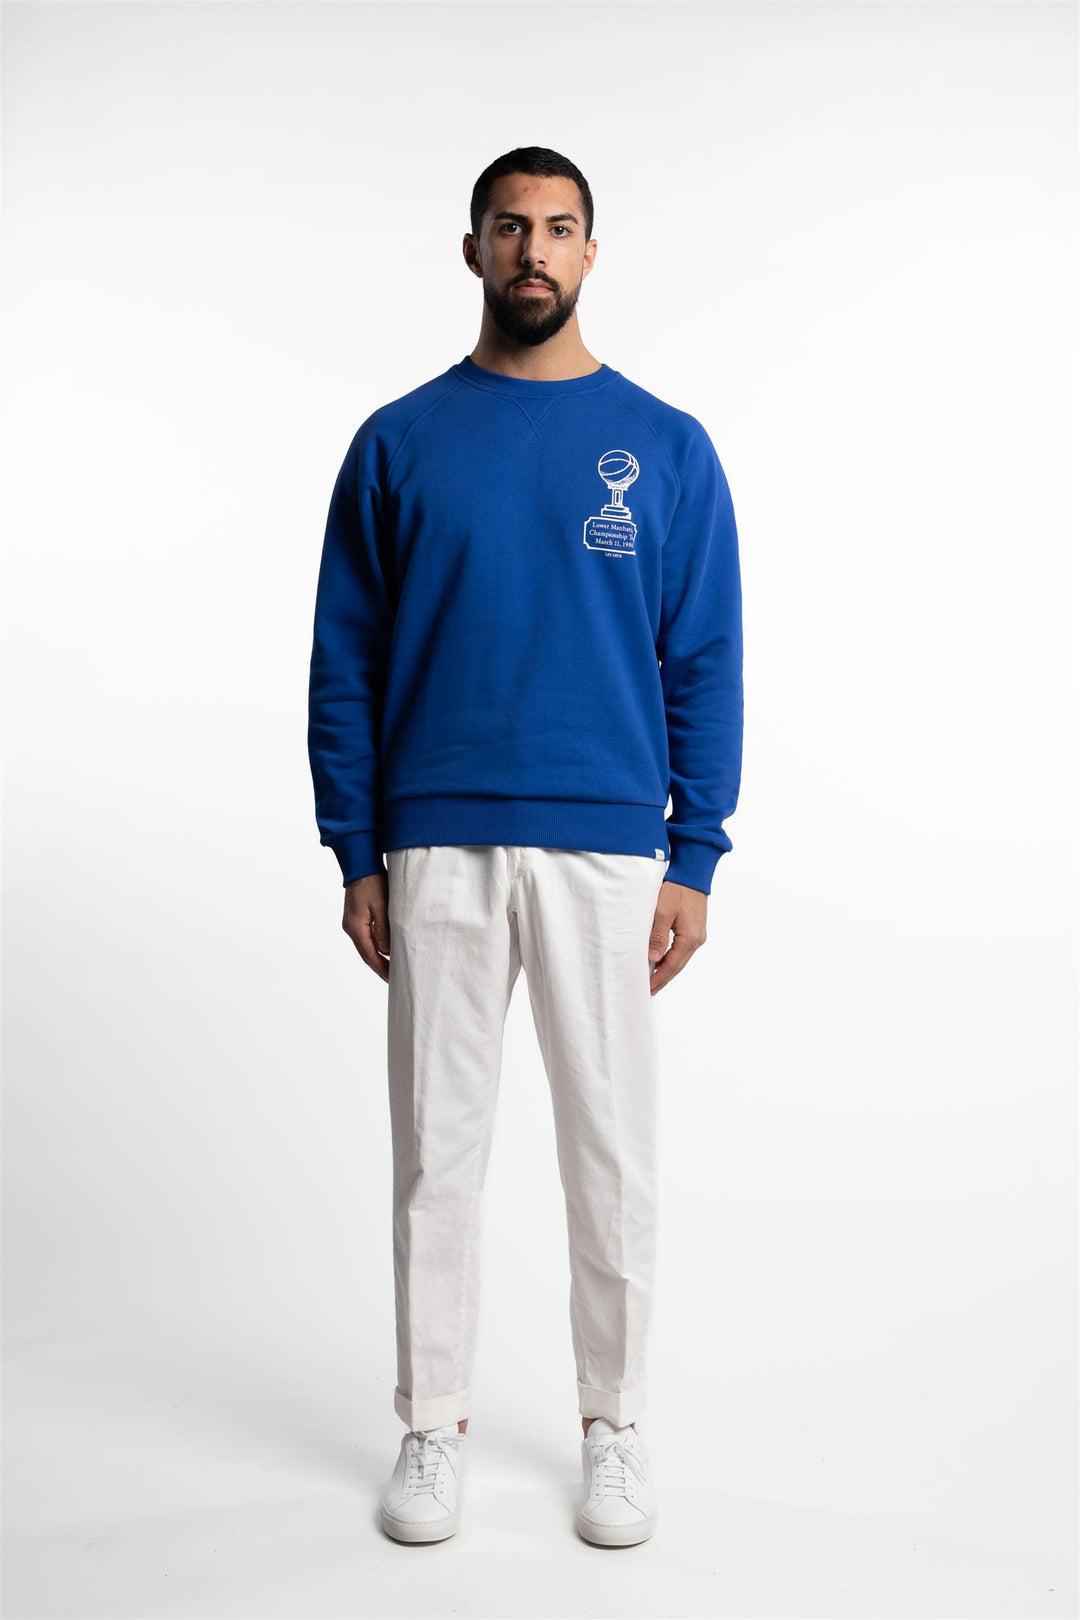 Tournament Sweatshirt Surf Blue/White